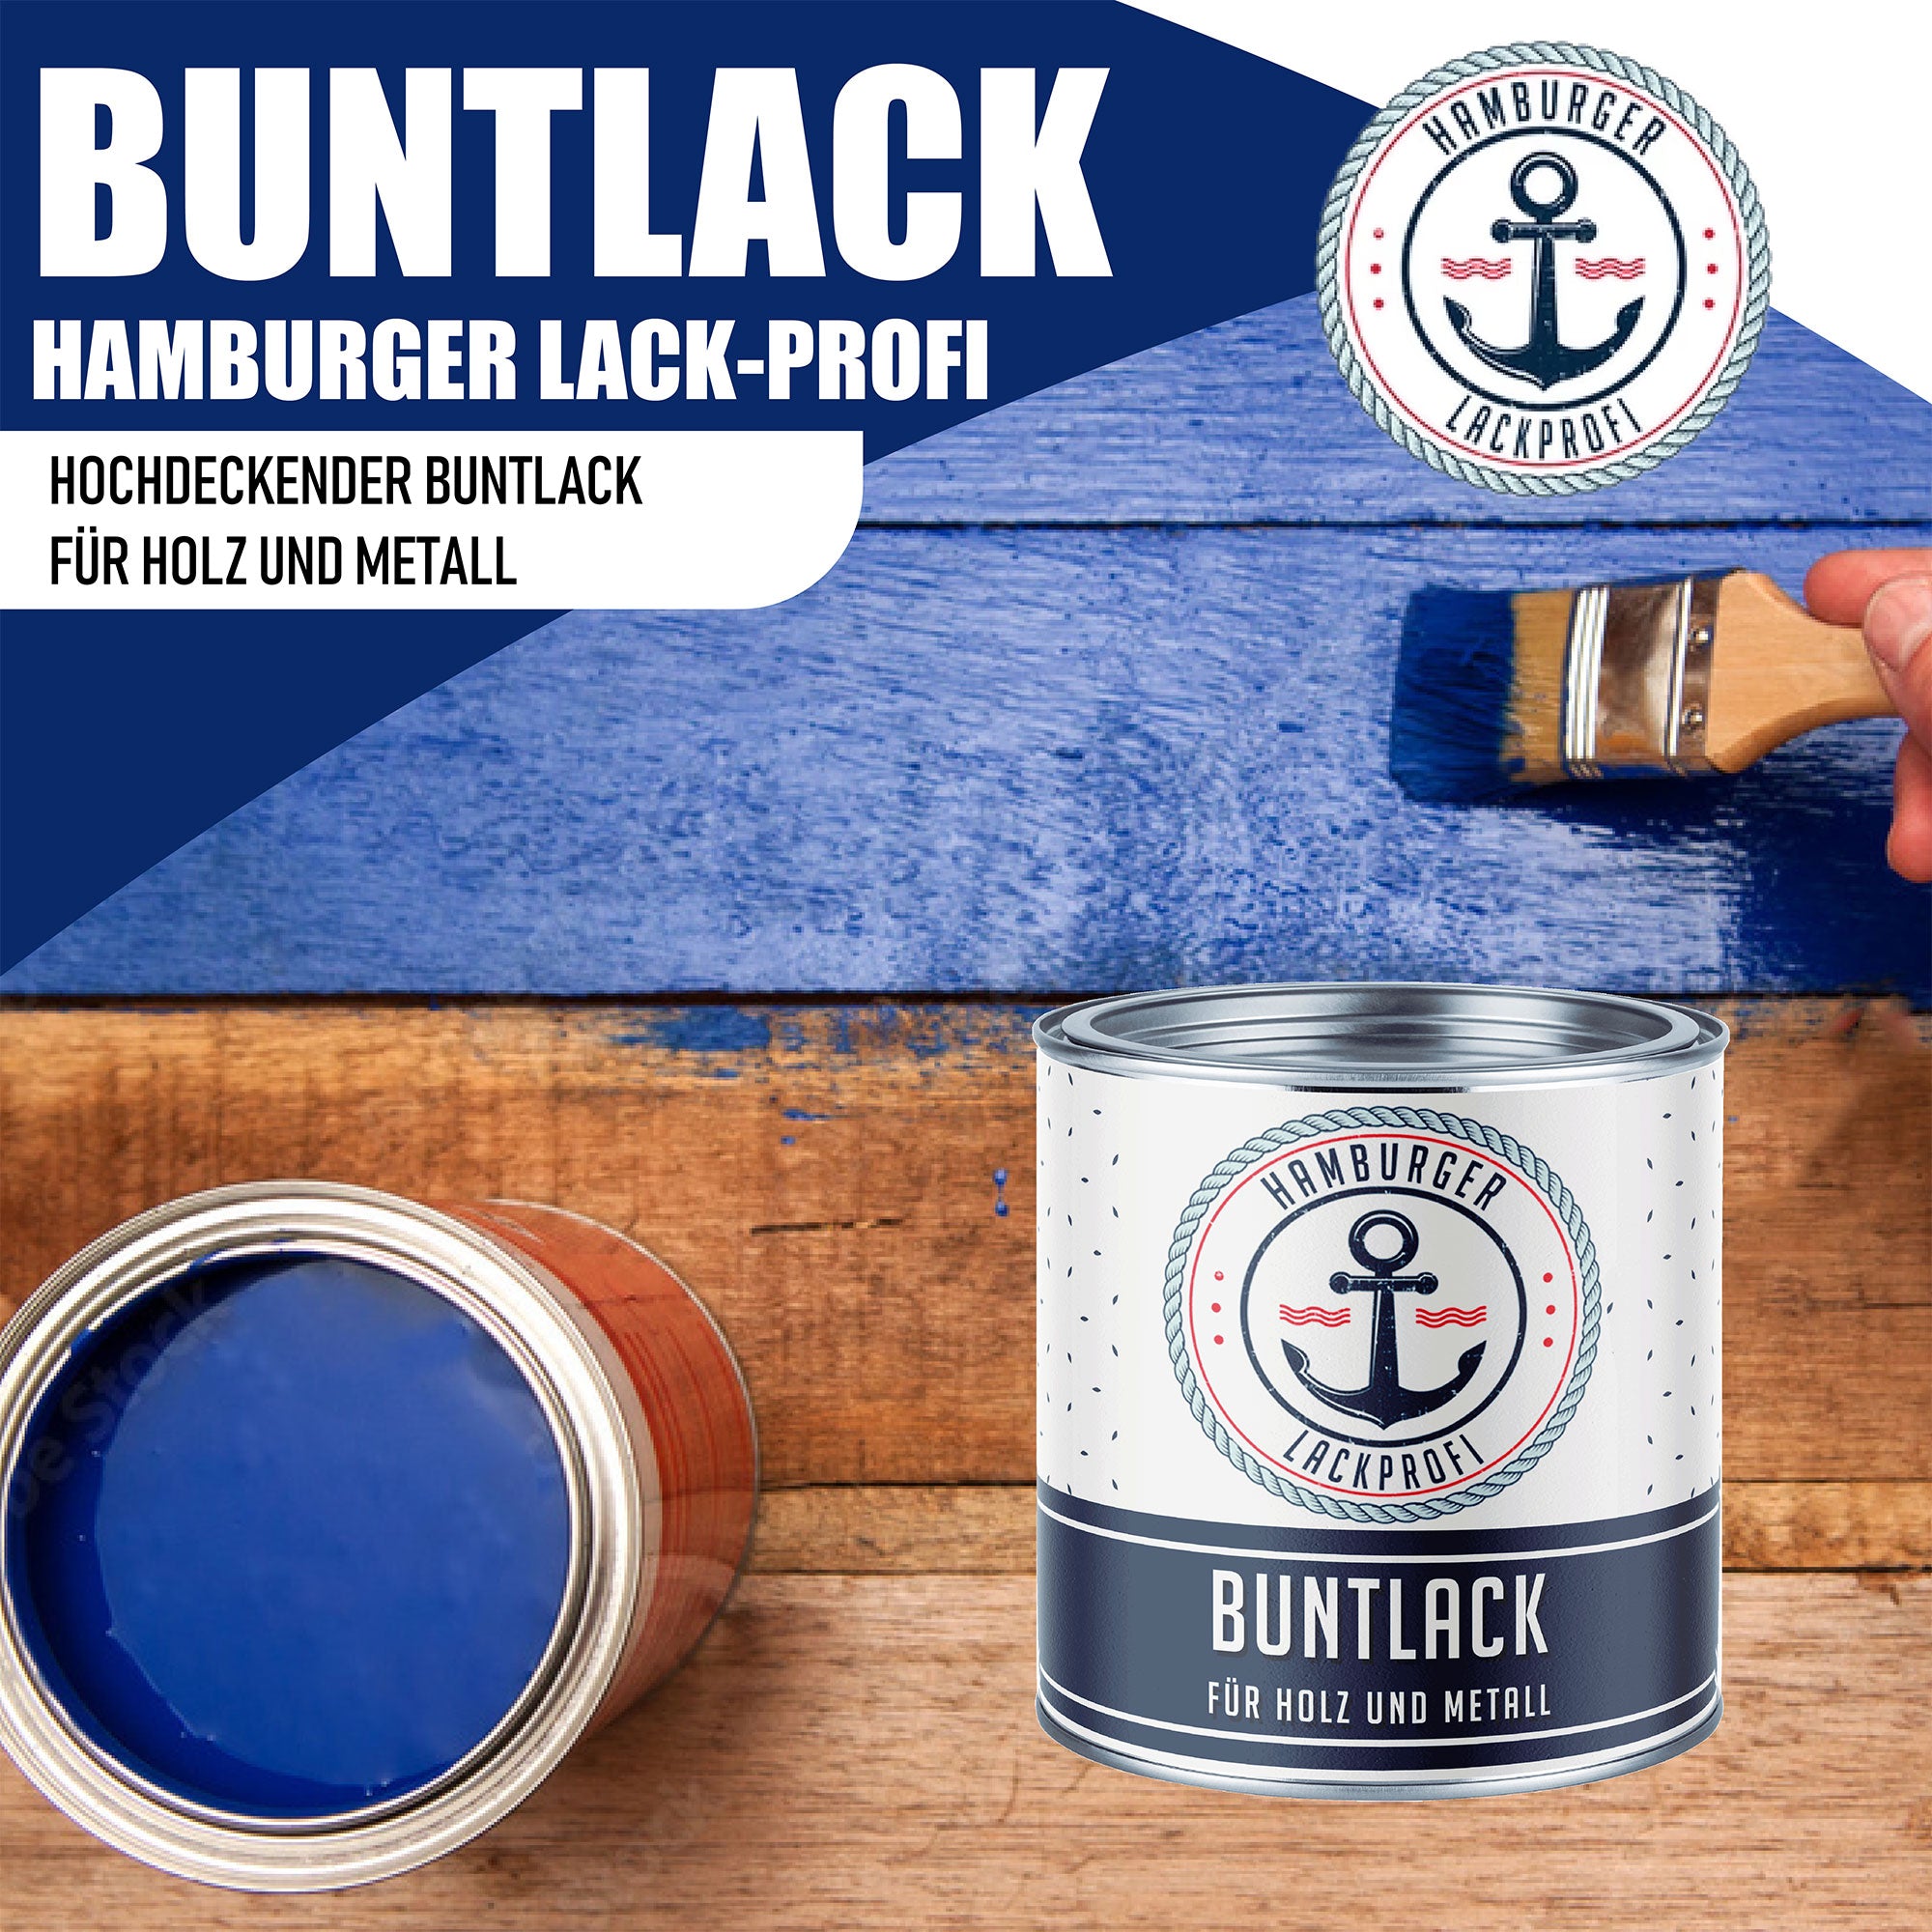 Hamburger Lack-Profi Buntlack Opalgrün RAL 6026 - Robuster Kunstharzlack